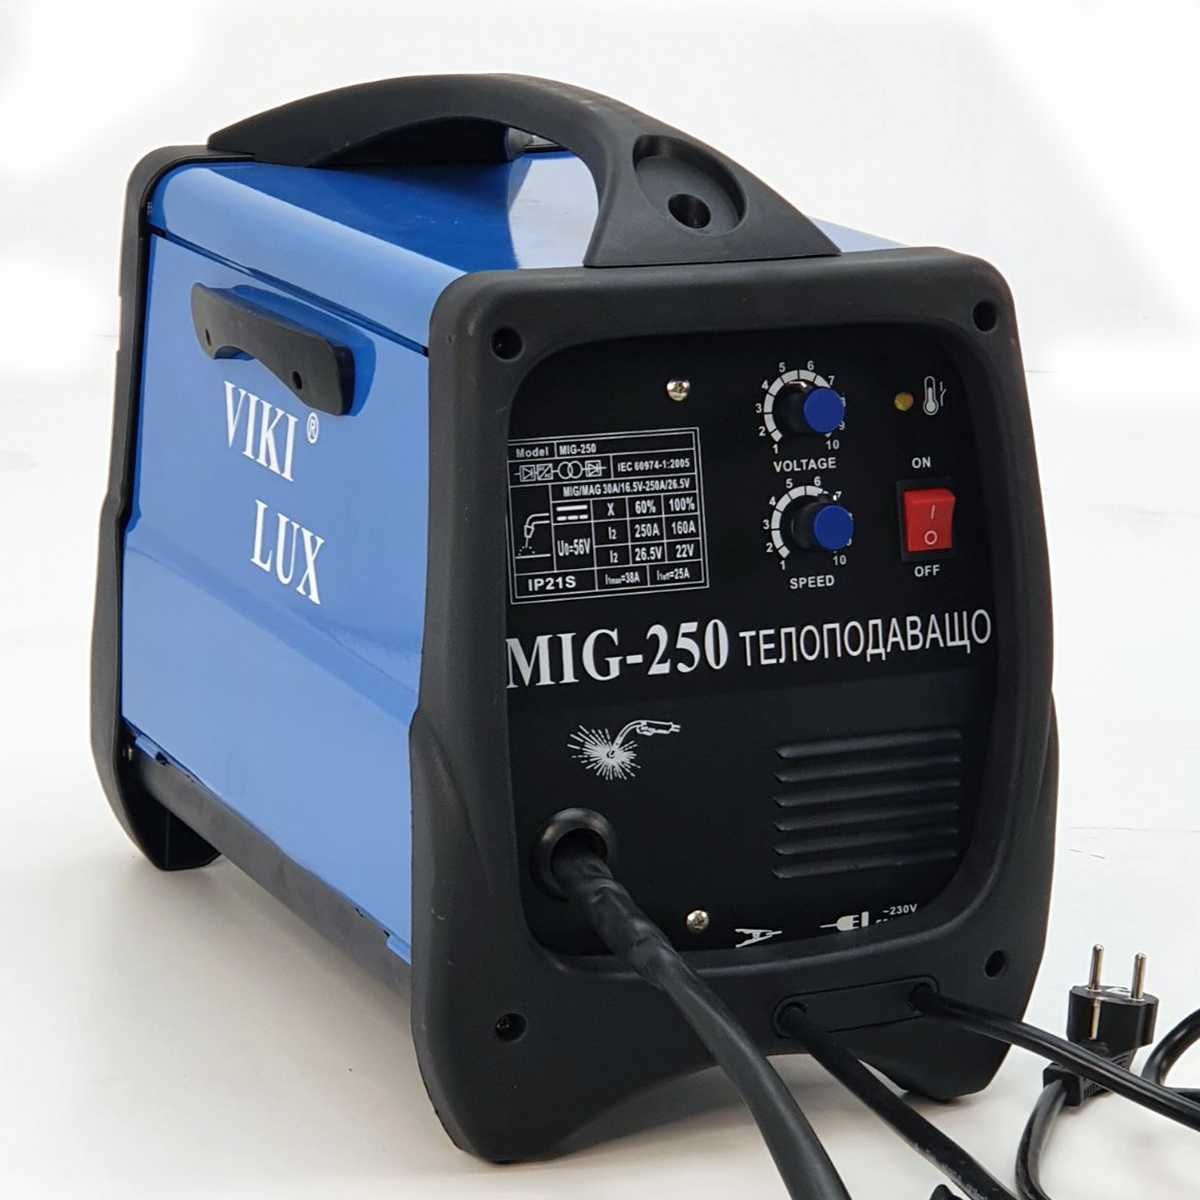 Телоподаващо Устройство MIG 250A Viki Lux – Професионално